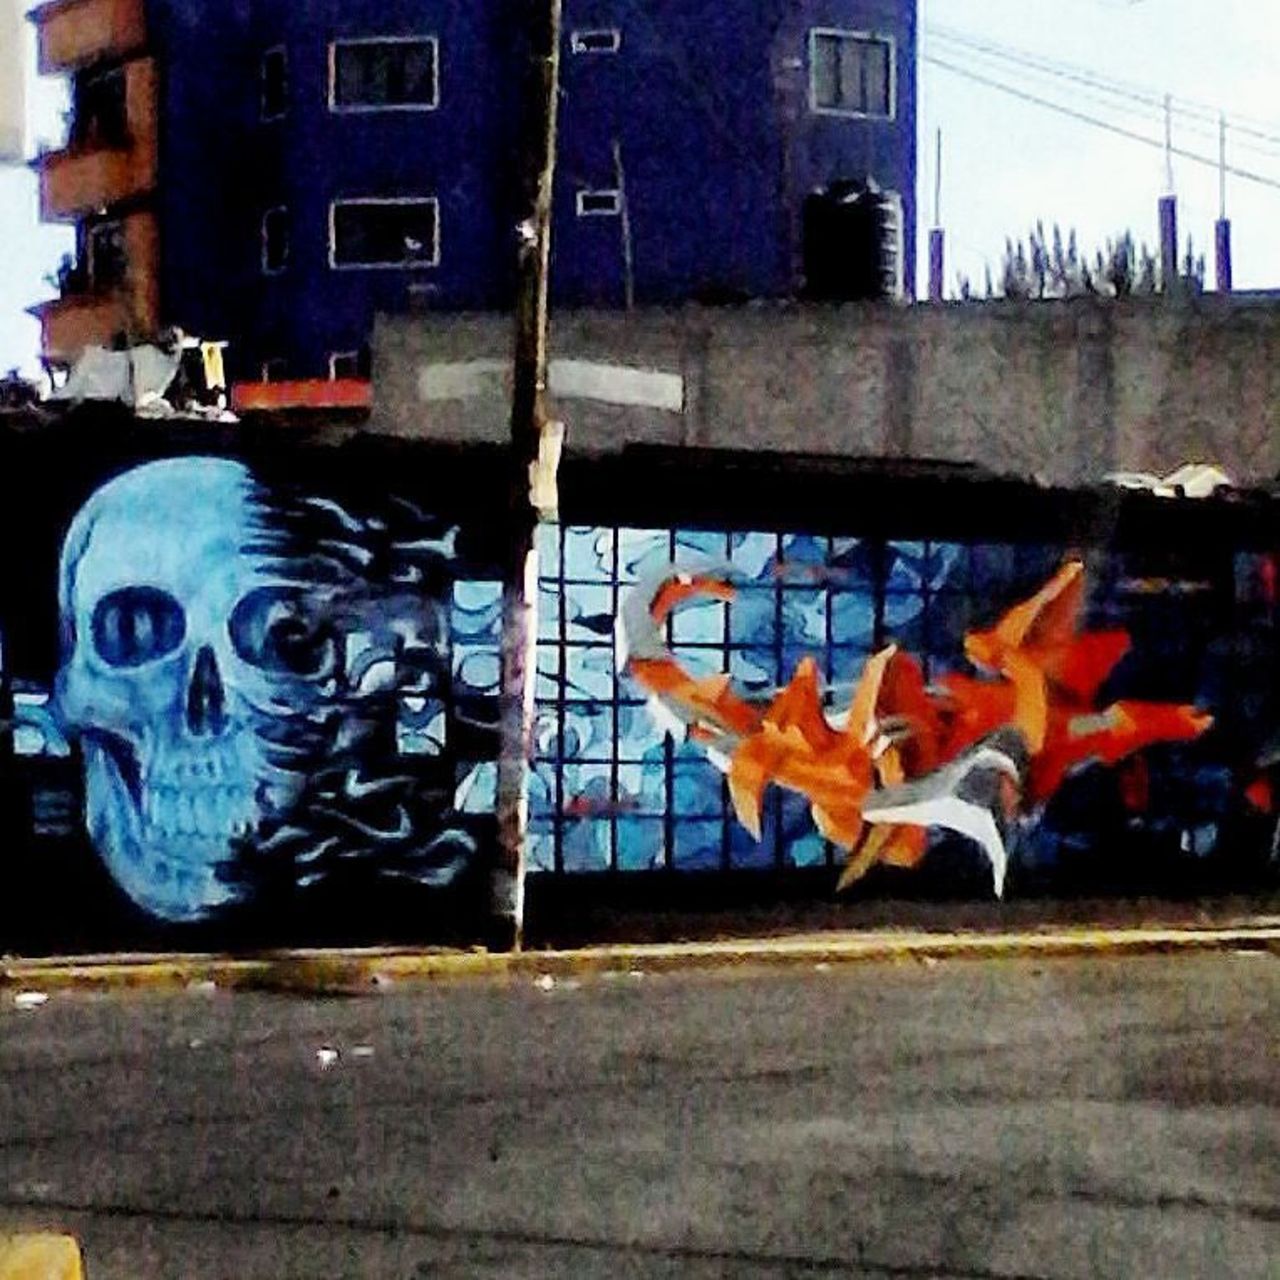 #Mexico #MexicoCity #StreetArt #Graffiti #StreetArtMexico #Urban #Art #Mural #Architecture #Wall #Skull #Head #Flam… https://t.co/nYTMrBQqhk